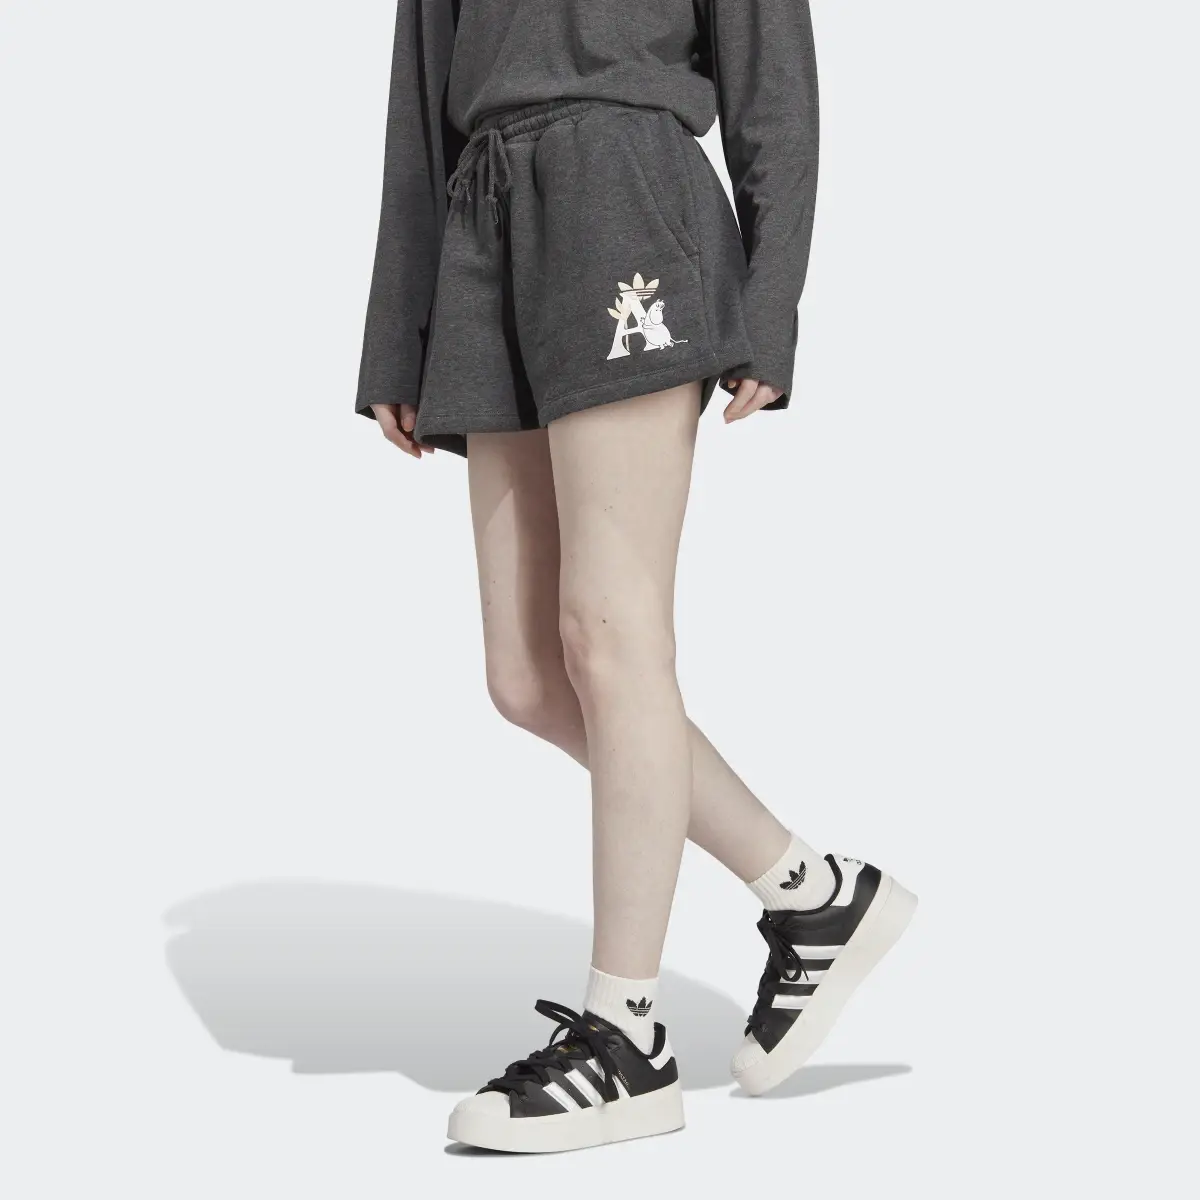 Adidas Originals x Moomin Sweat Shorts. 1